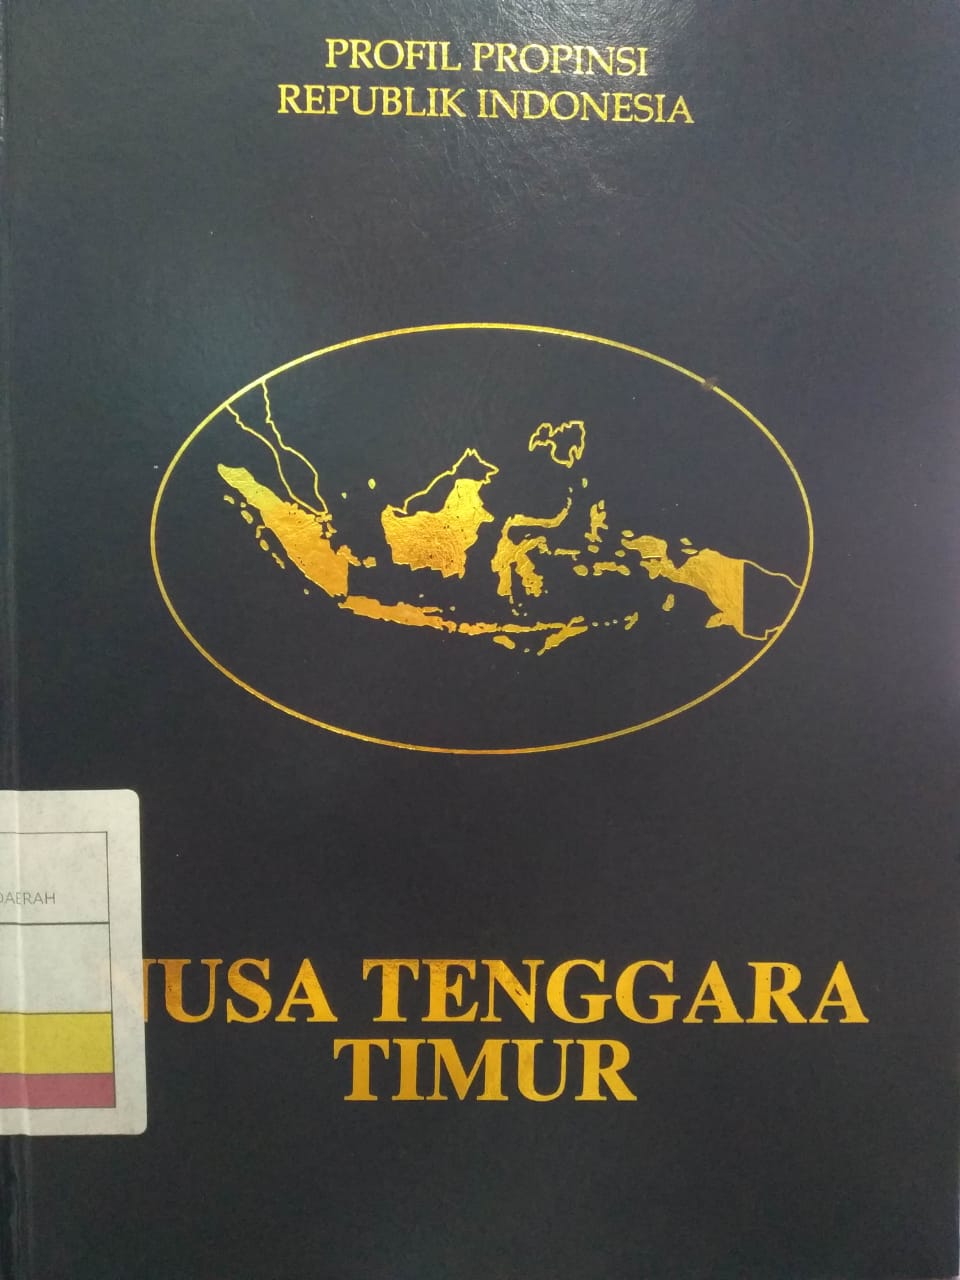 Buku Profil Propinsi Republik Indonesia : Nusa Tenggara Timur